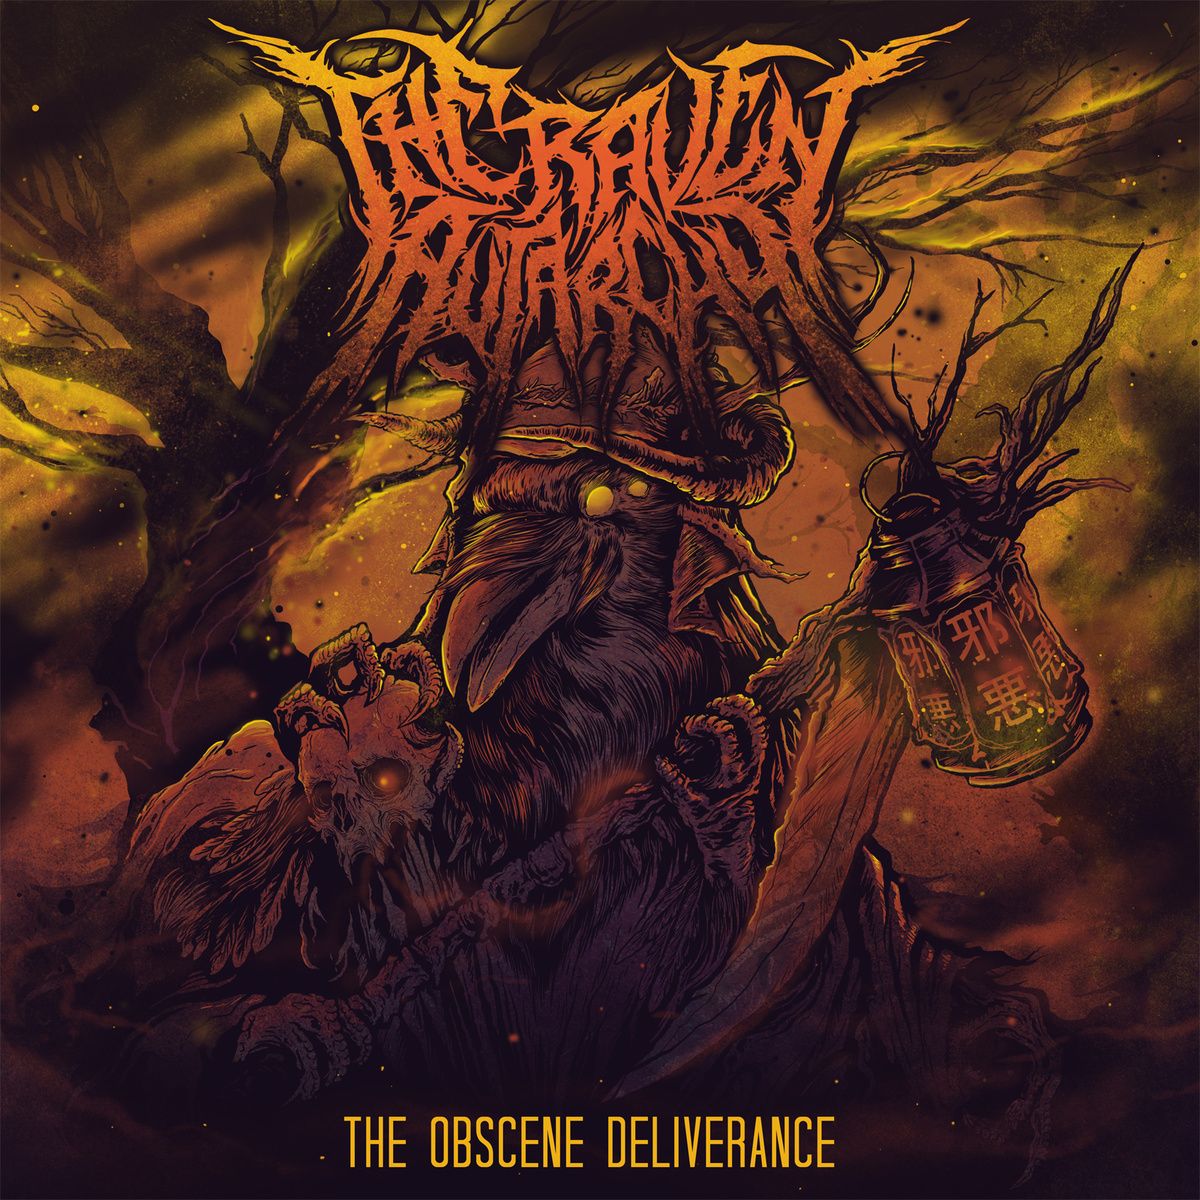 The Raven Autarchy - The Obscene Deliverance